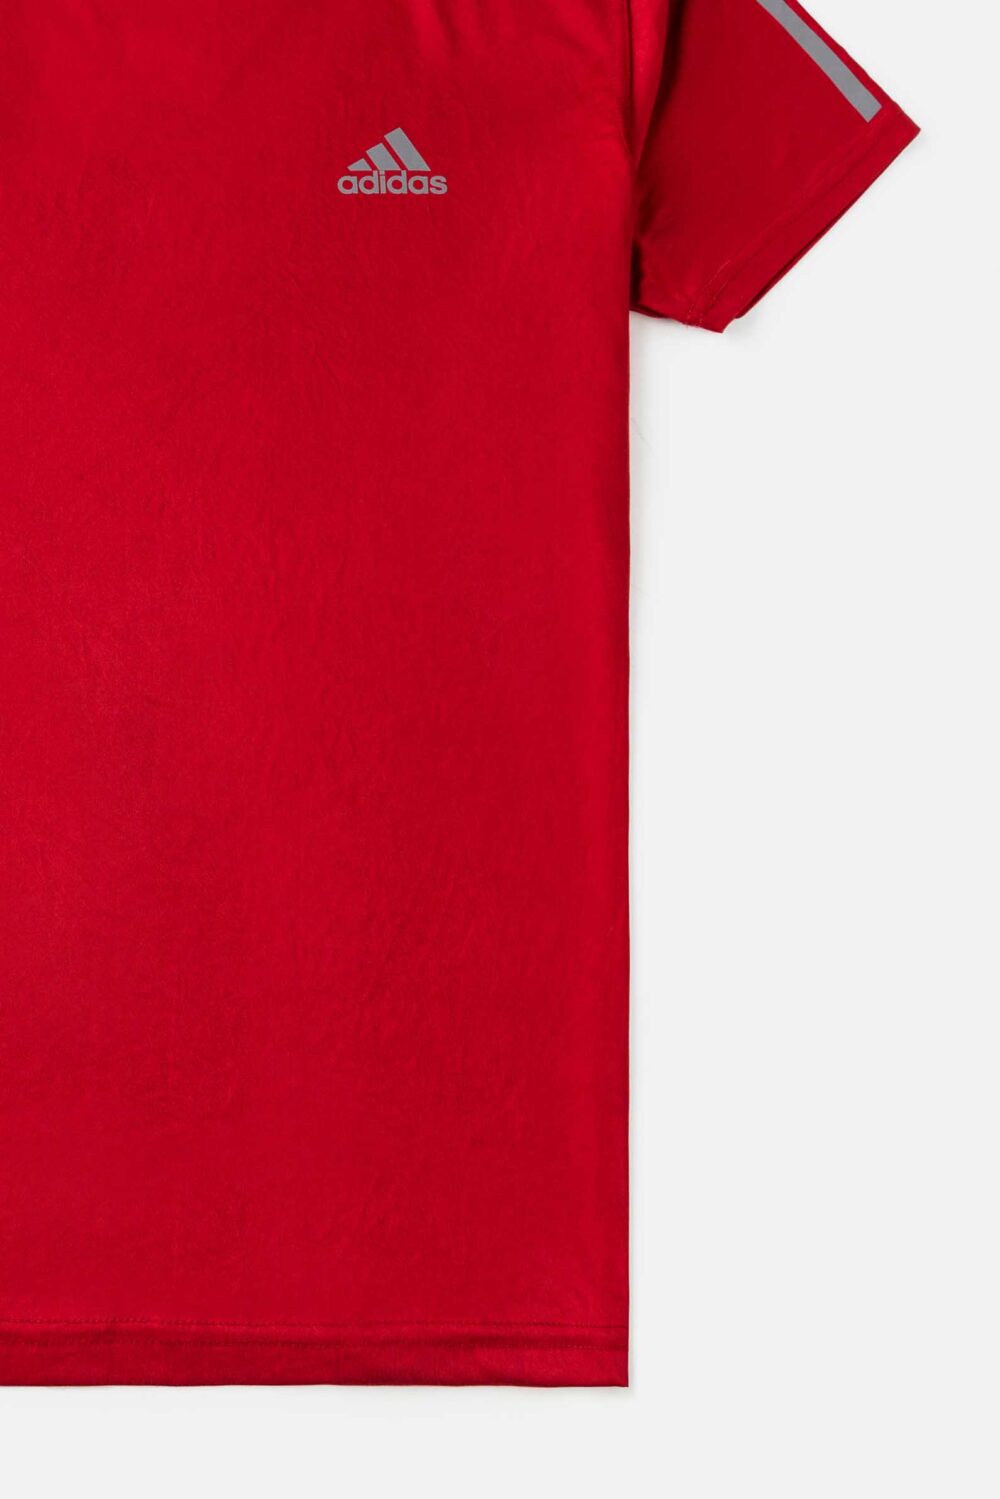 Adidas Premium Sports T Shirt – Red